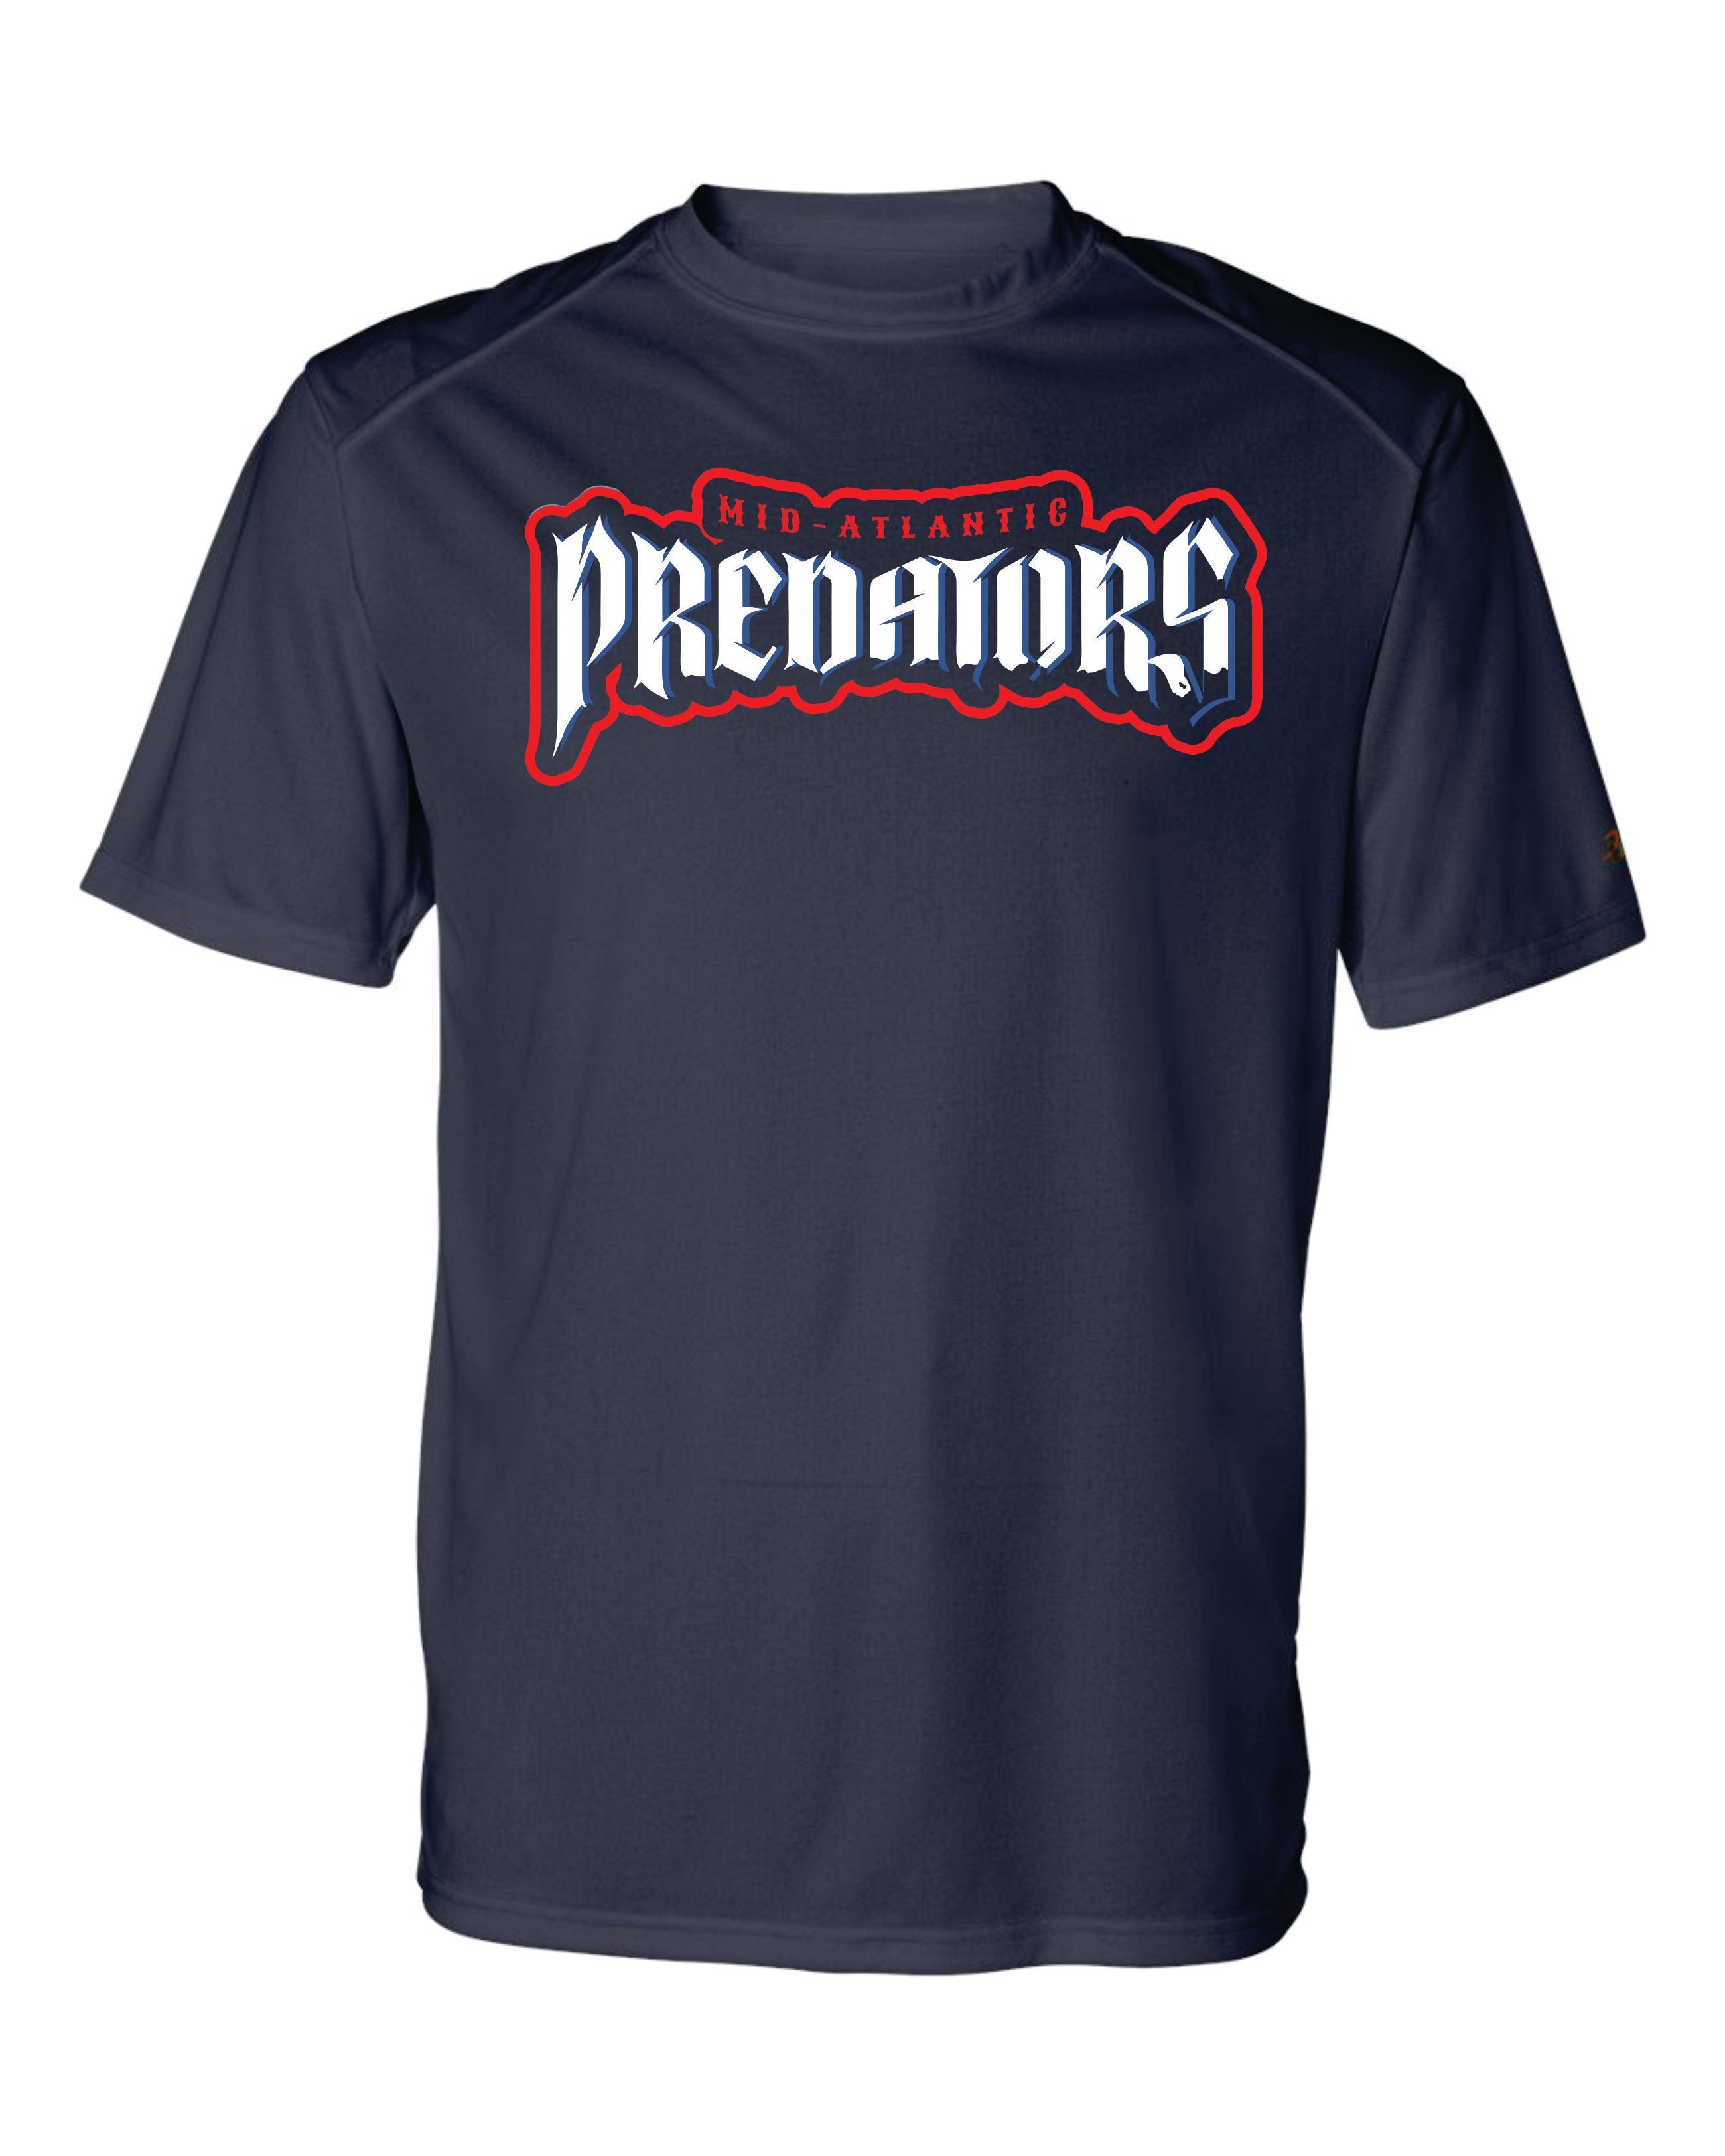 Predators Short Sleeve Badger Dri Fit T shirt - Women